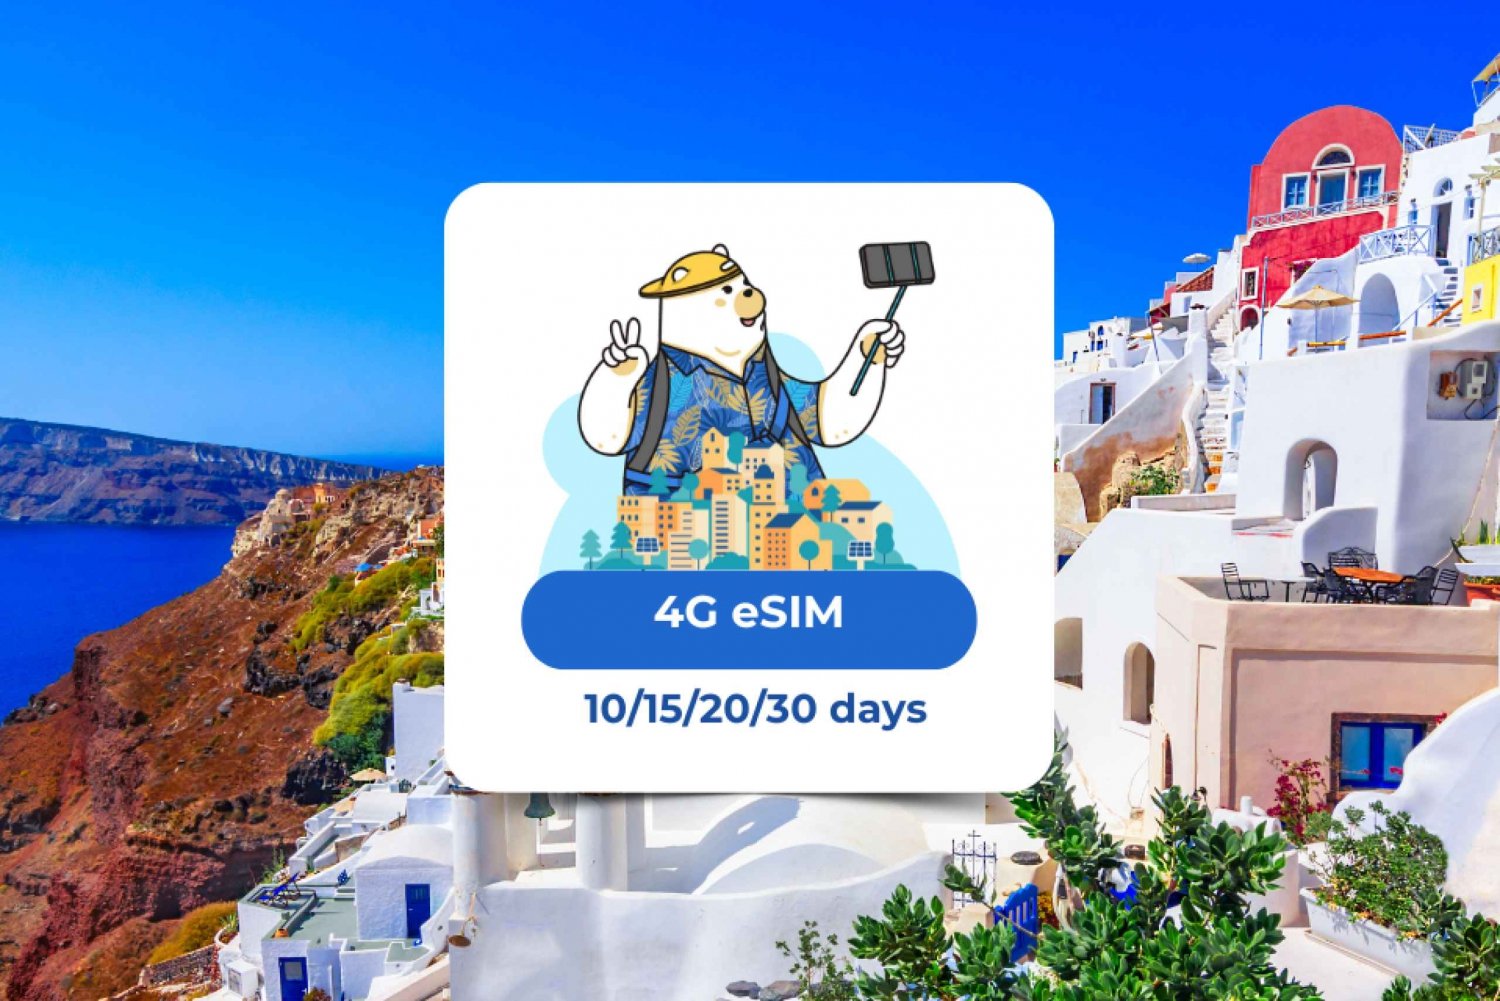 Europa: eSIM Mobile Data (40 paesi) 10/15/20/30 giorni